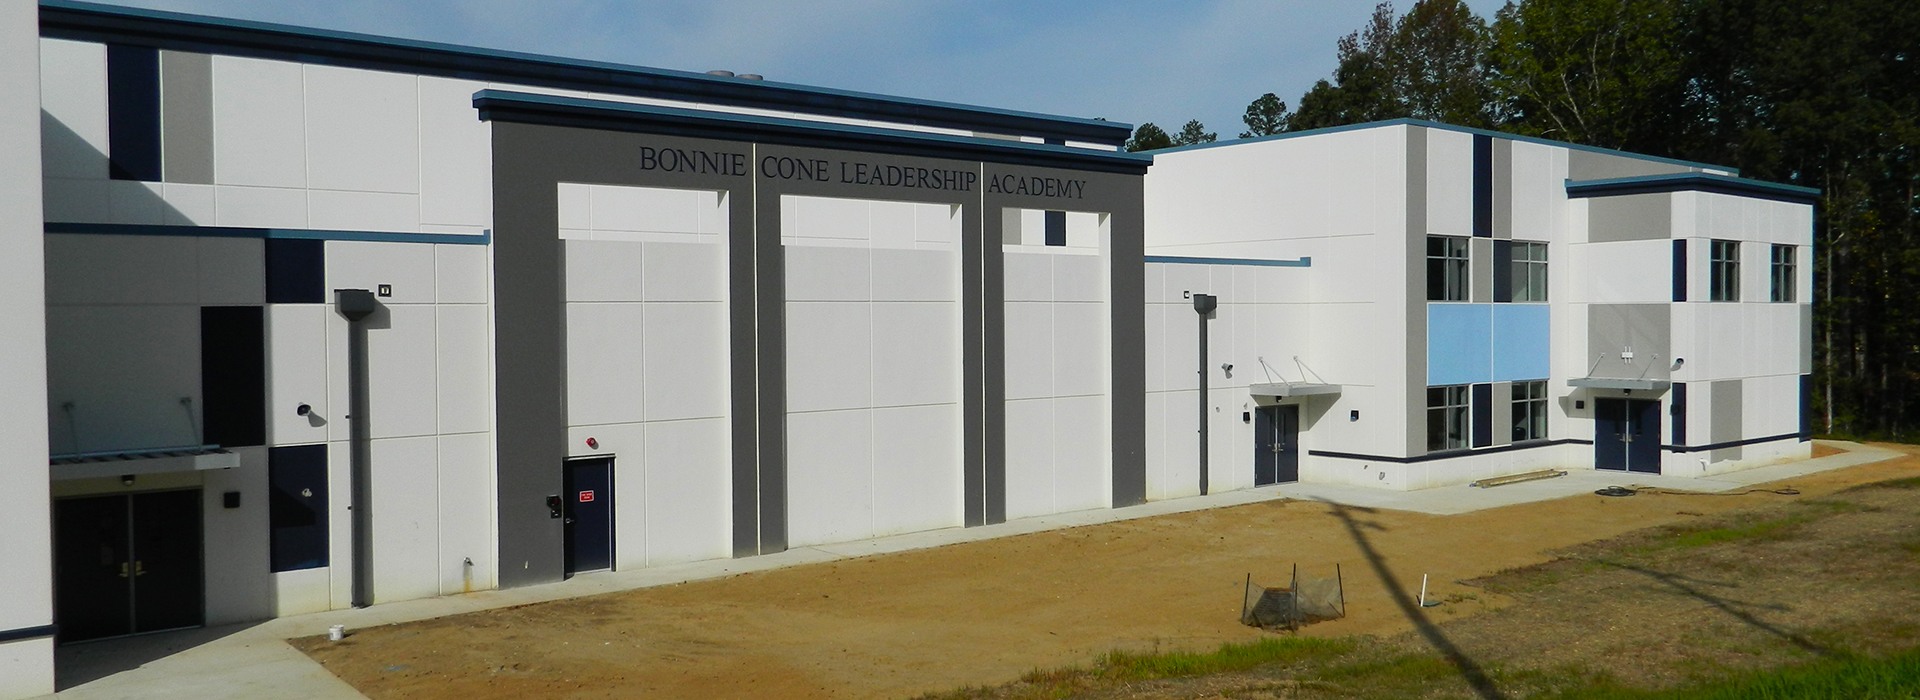 Bonnie Cone Leadership Academy Exterior